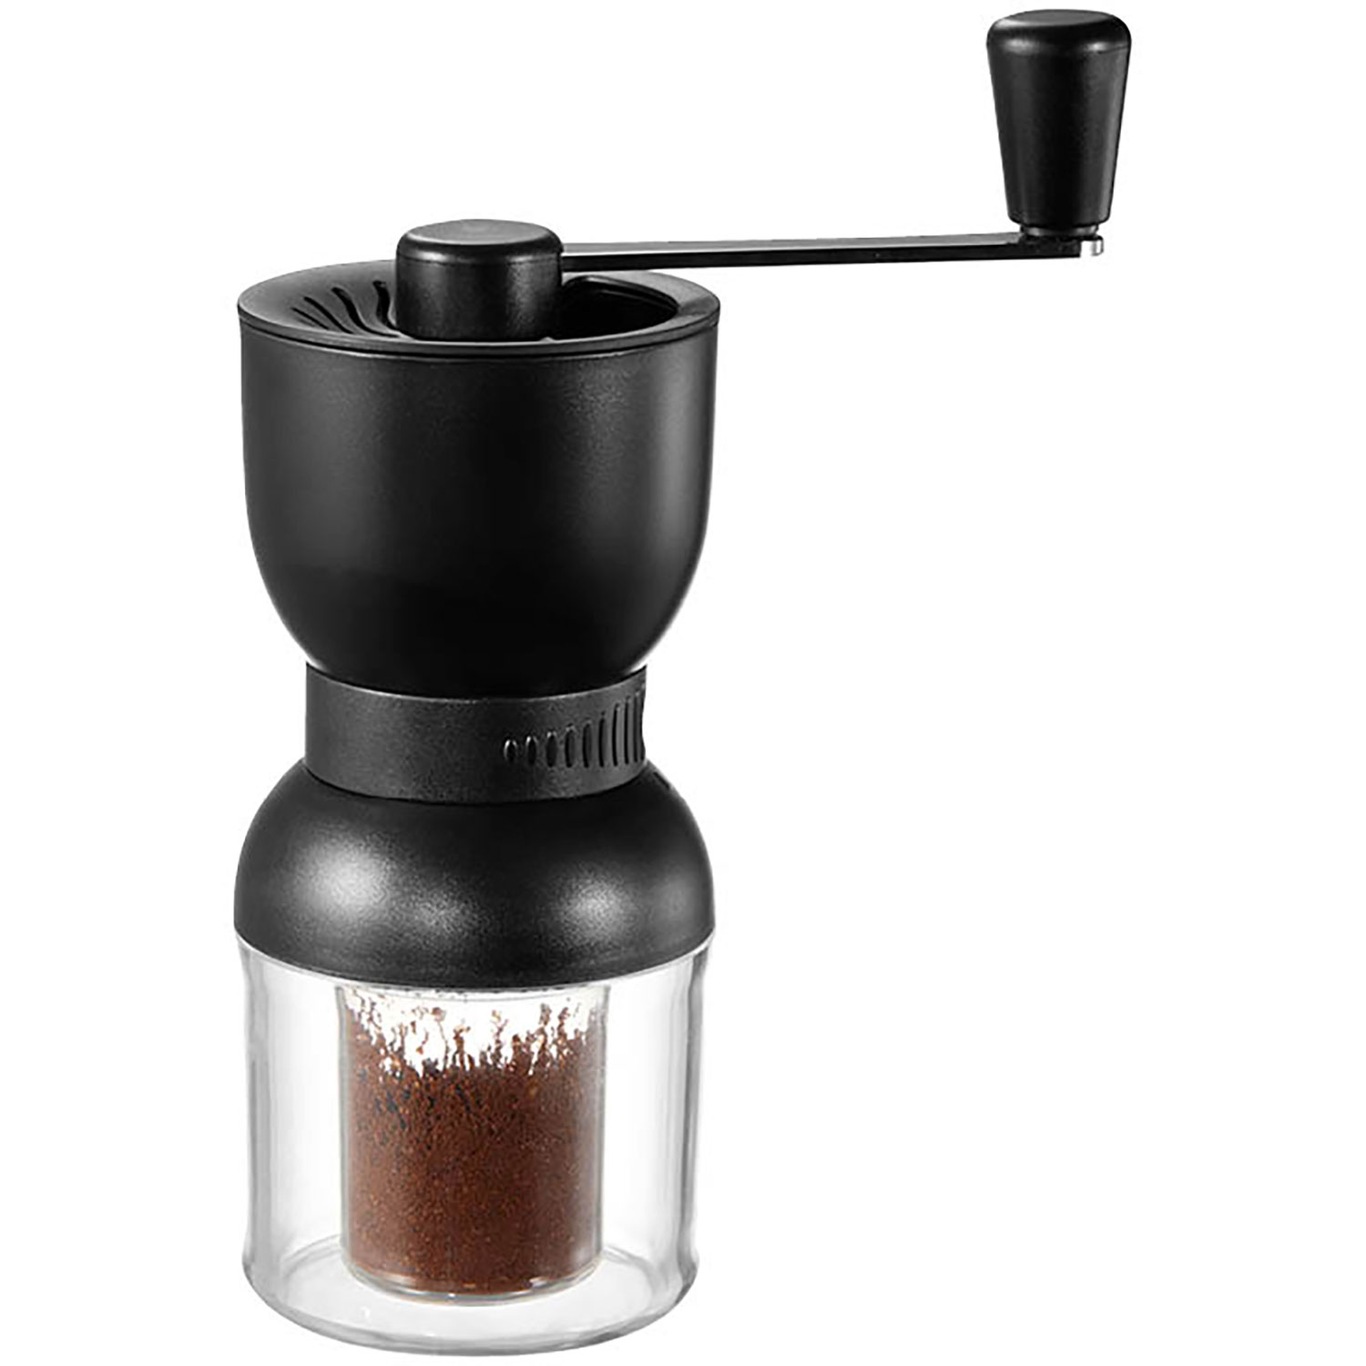 Catura coffee grinder Manual ceramic mill